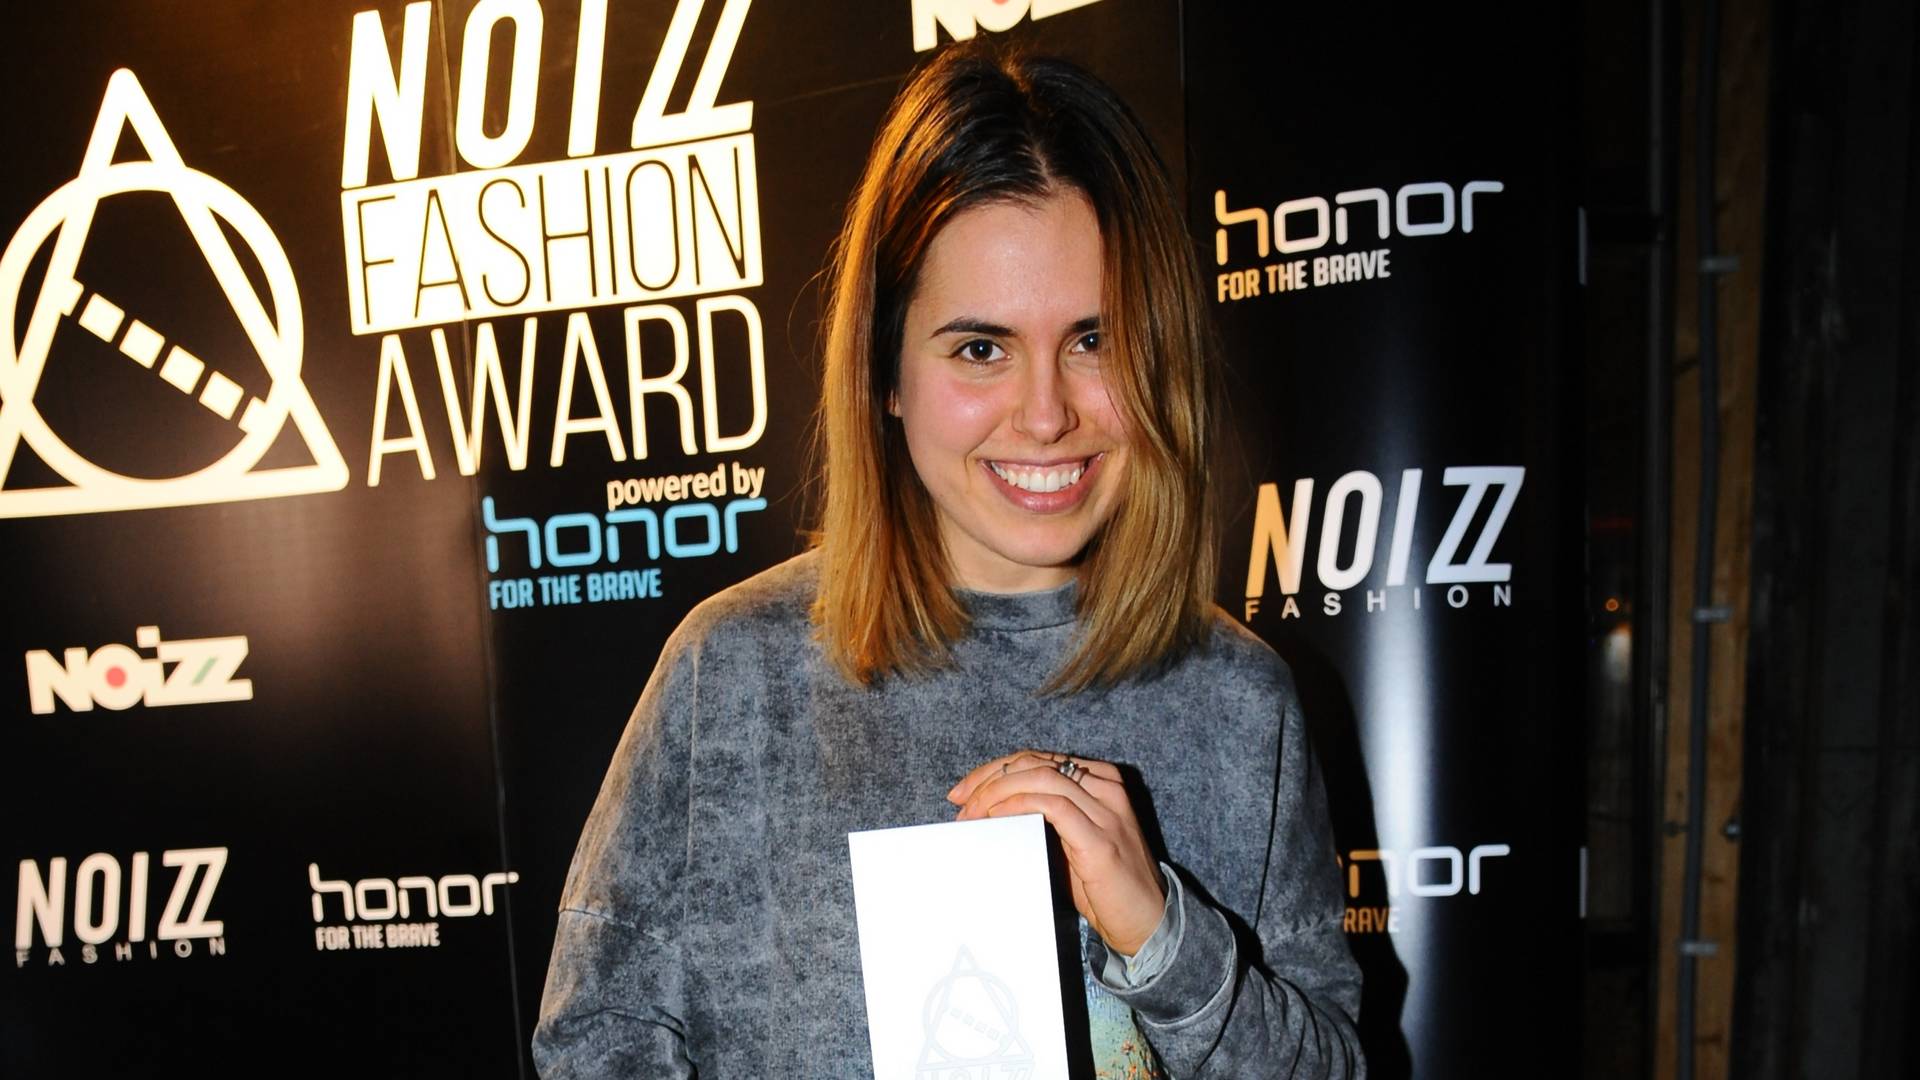 Marta Garčević, NOIZZ Fashion Award dobitnica: Moda treba da utiče na širenje dobrote